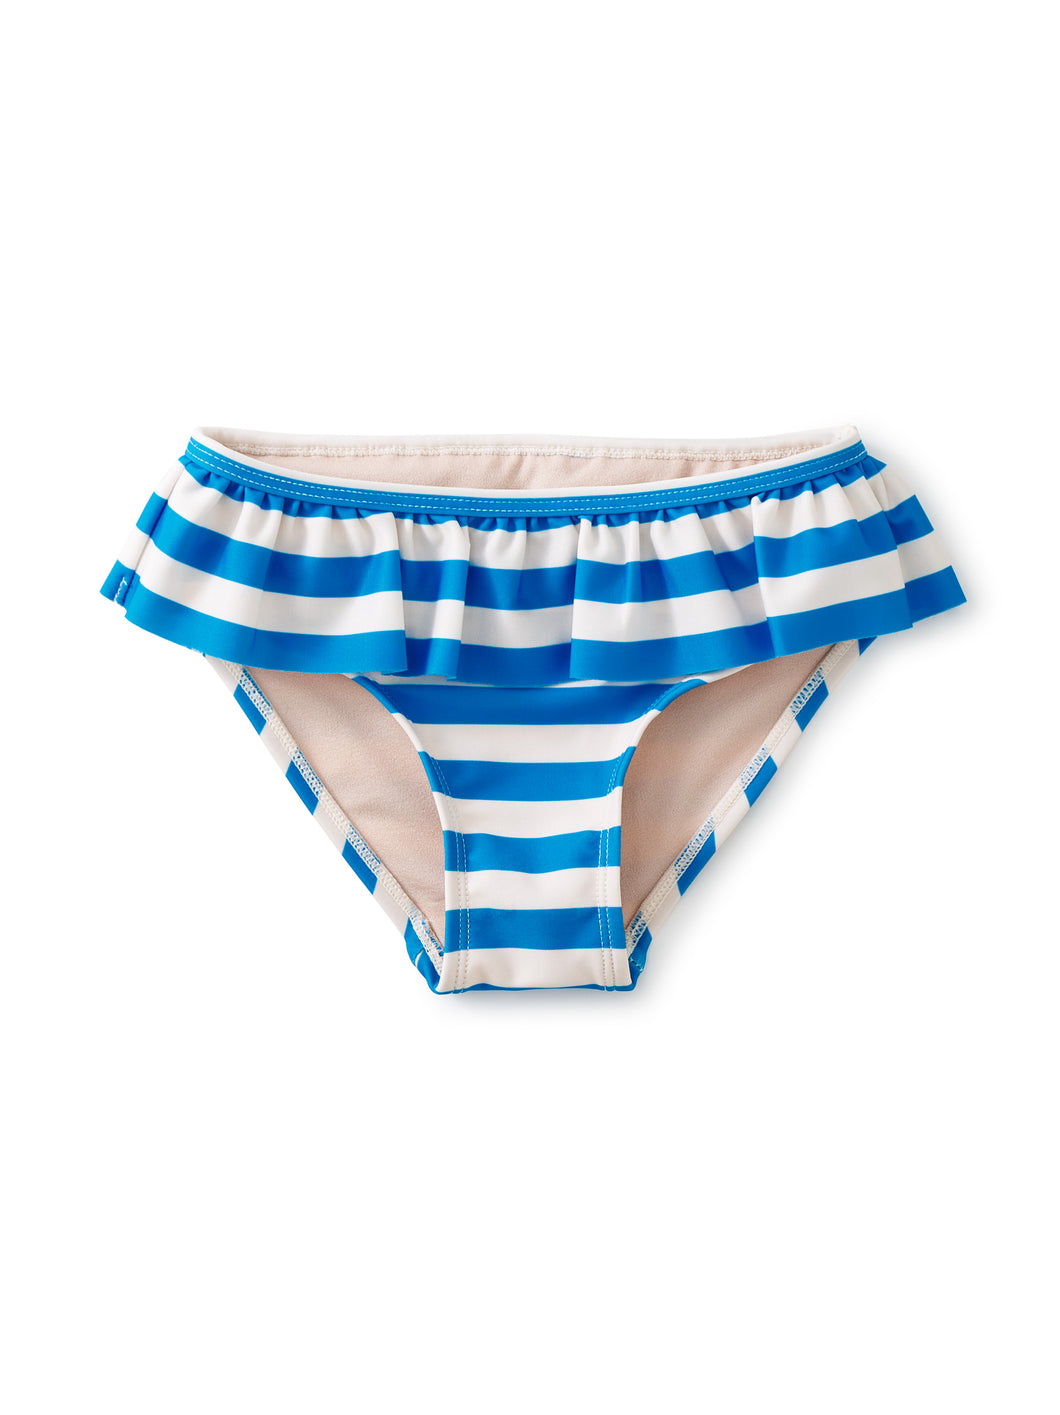 Tea Collection Ruffled Striped Bikini Bottoms - Stripes in Teal